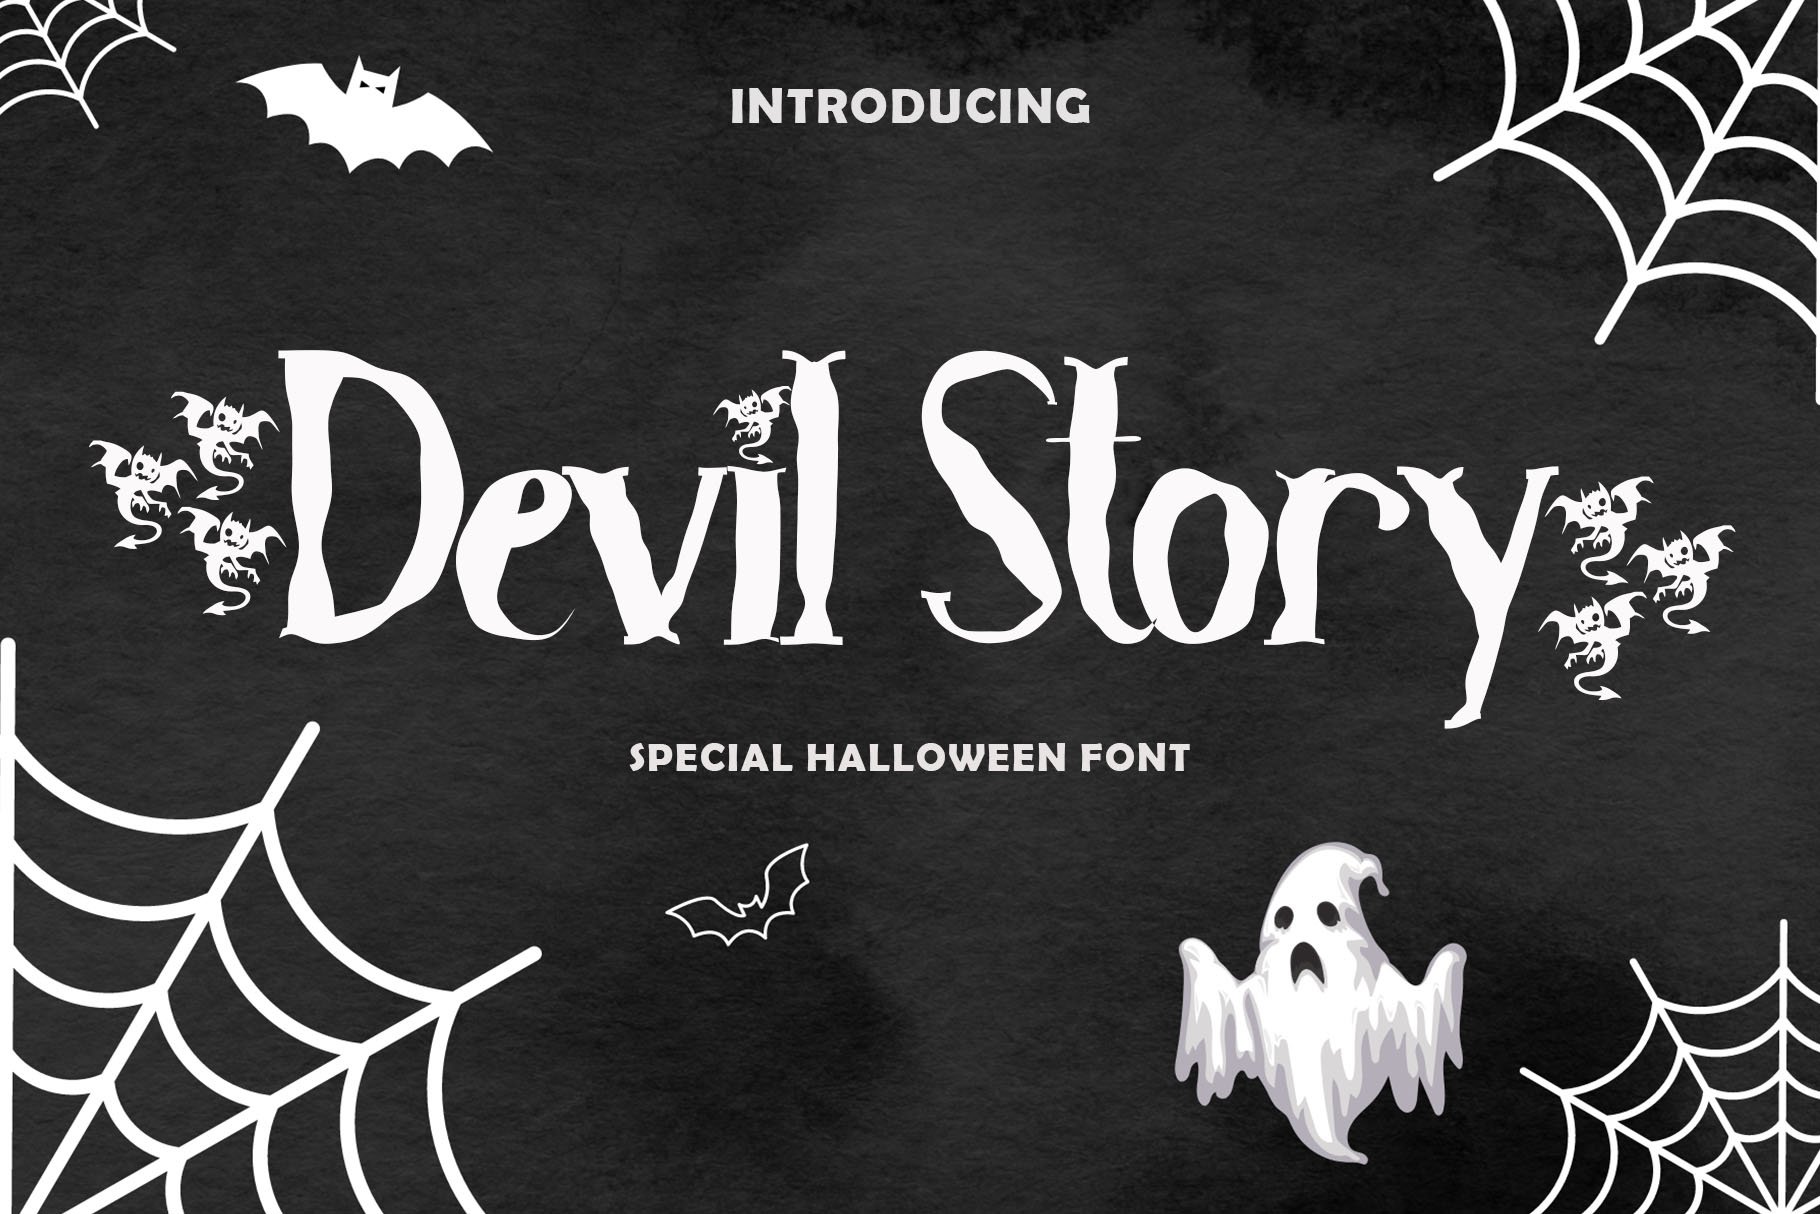 Devil Story cover image.